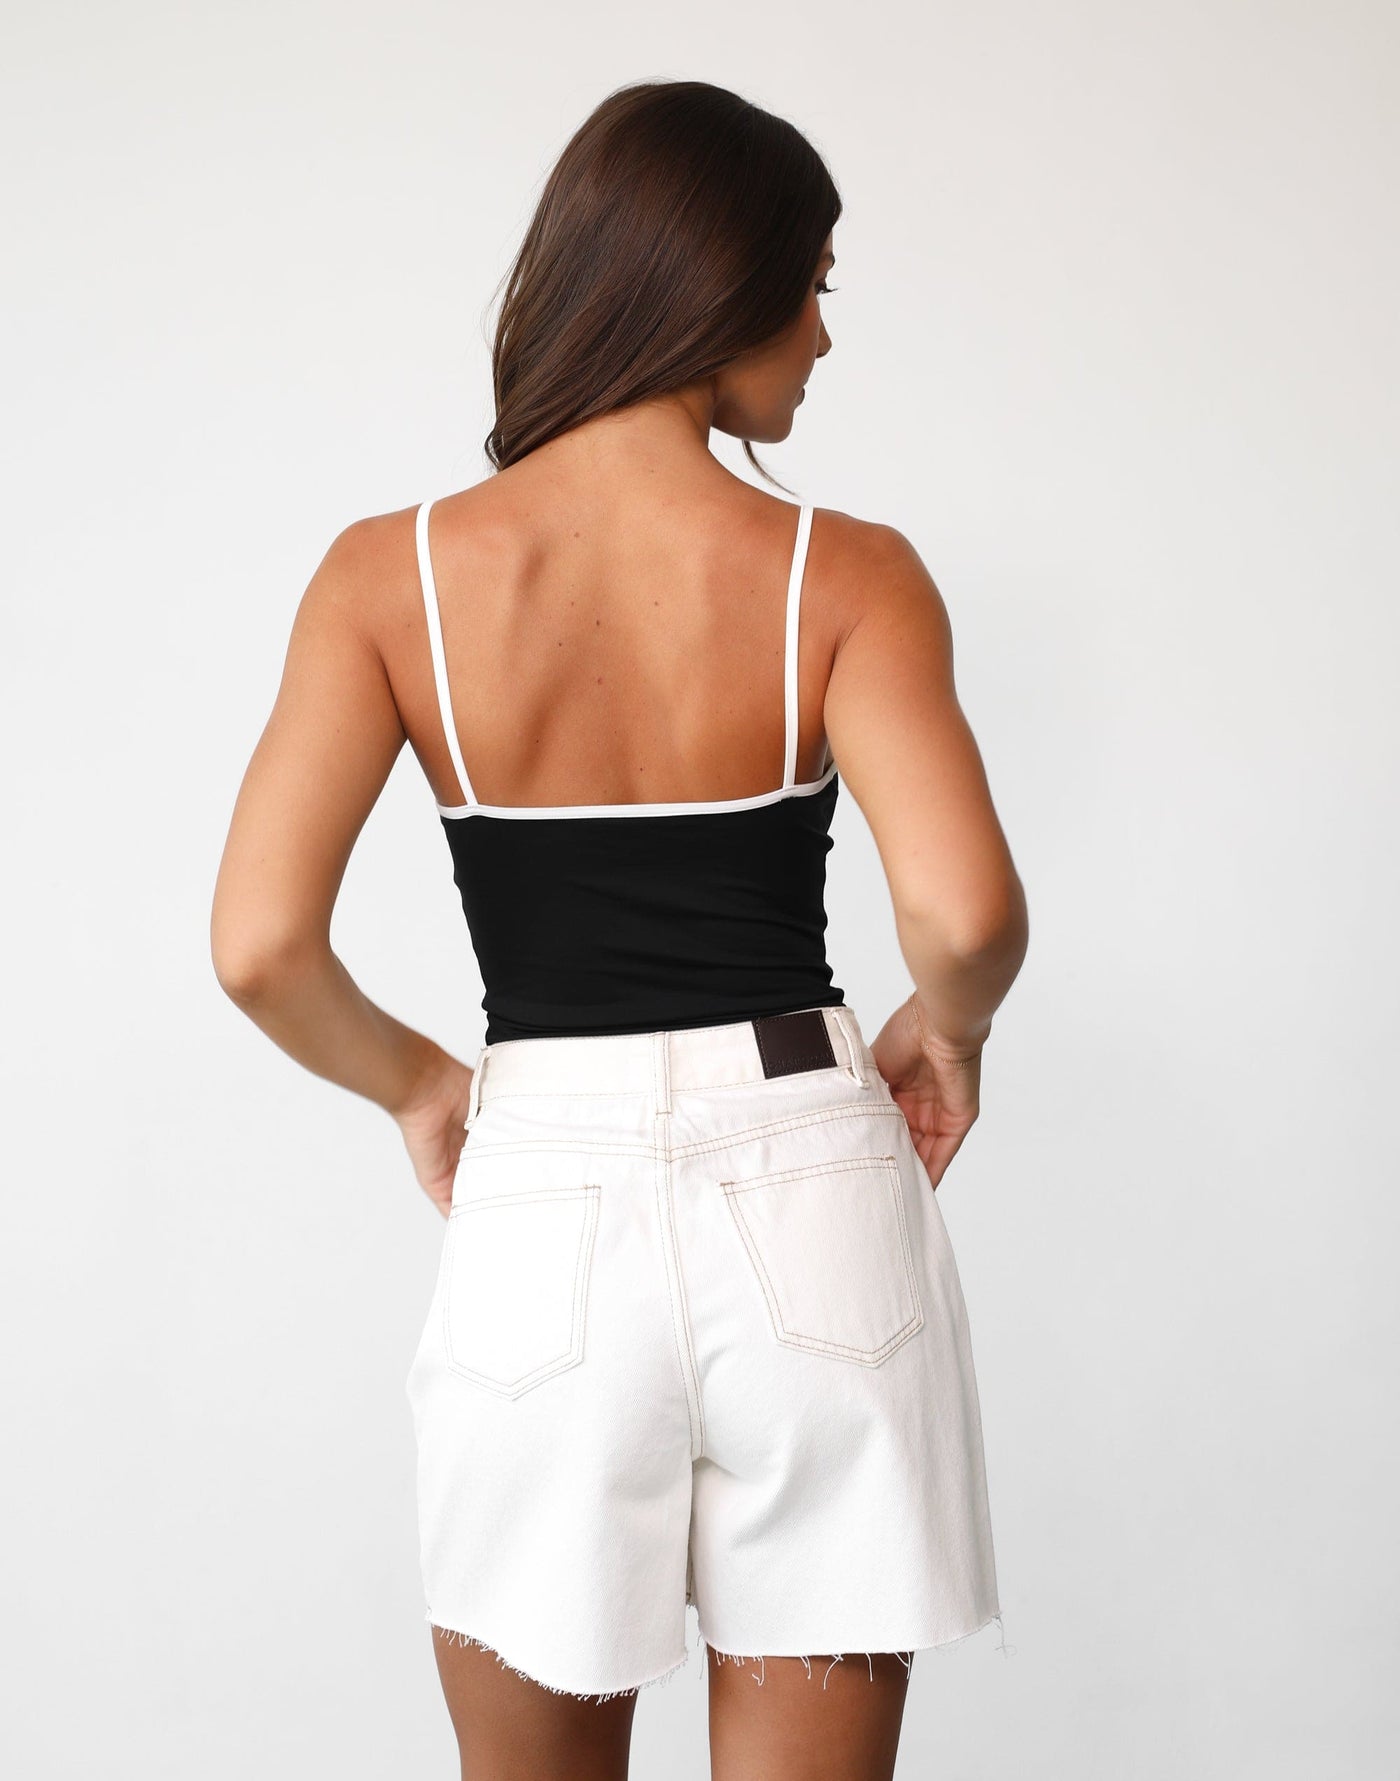 Elly Bodysuit (Black/White) | Charcoal Clothing Exclusive - Contrast Detail Scoop Neckline Bodysuit - Women's Top - Charcoal Clothing